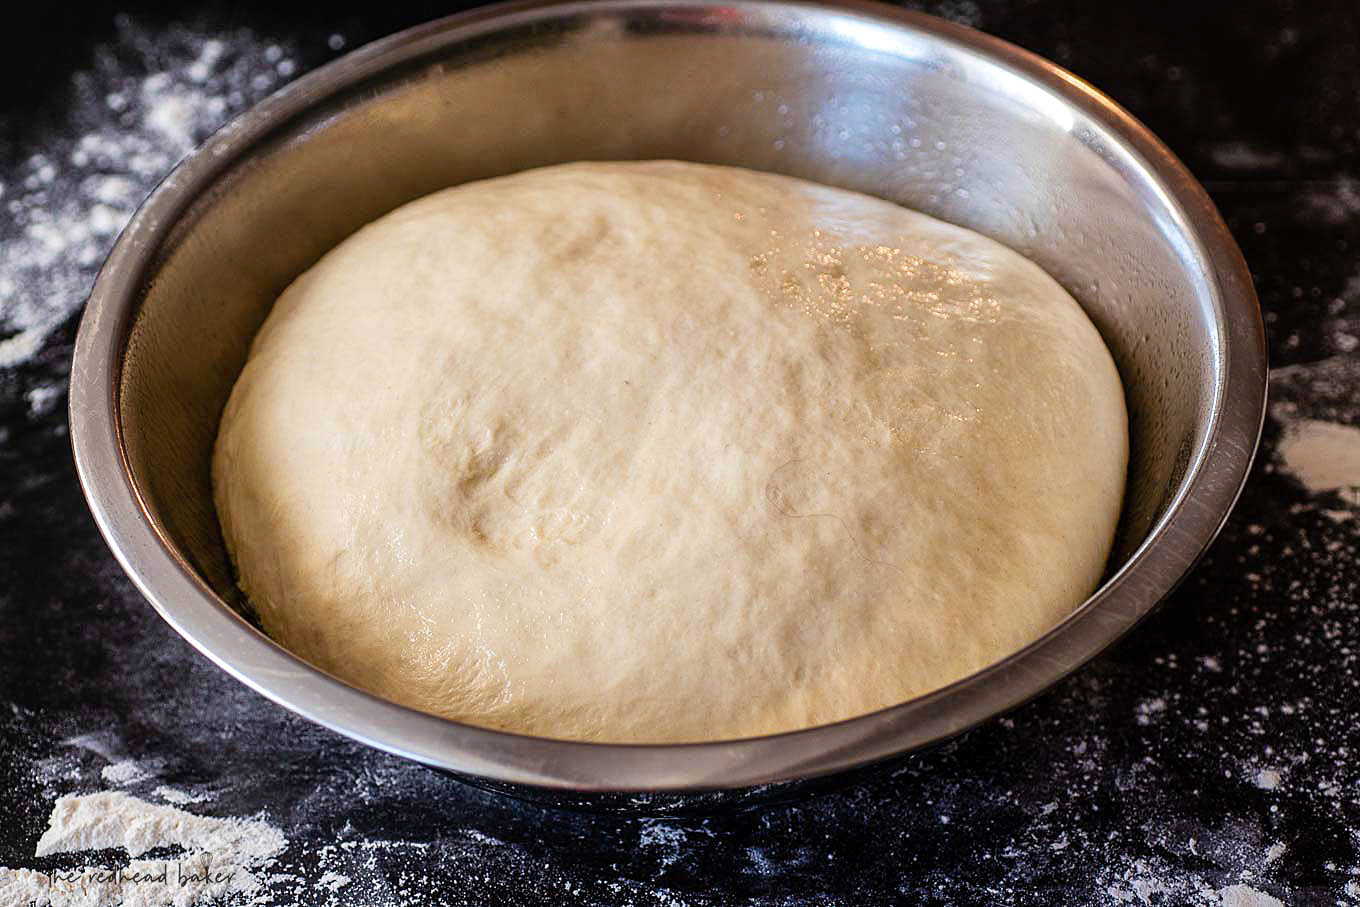 A bowl of fully risen Italian bread dough.